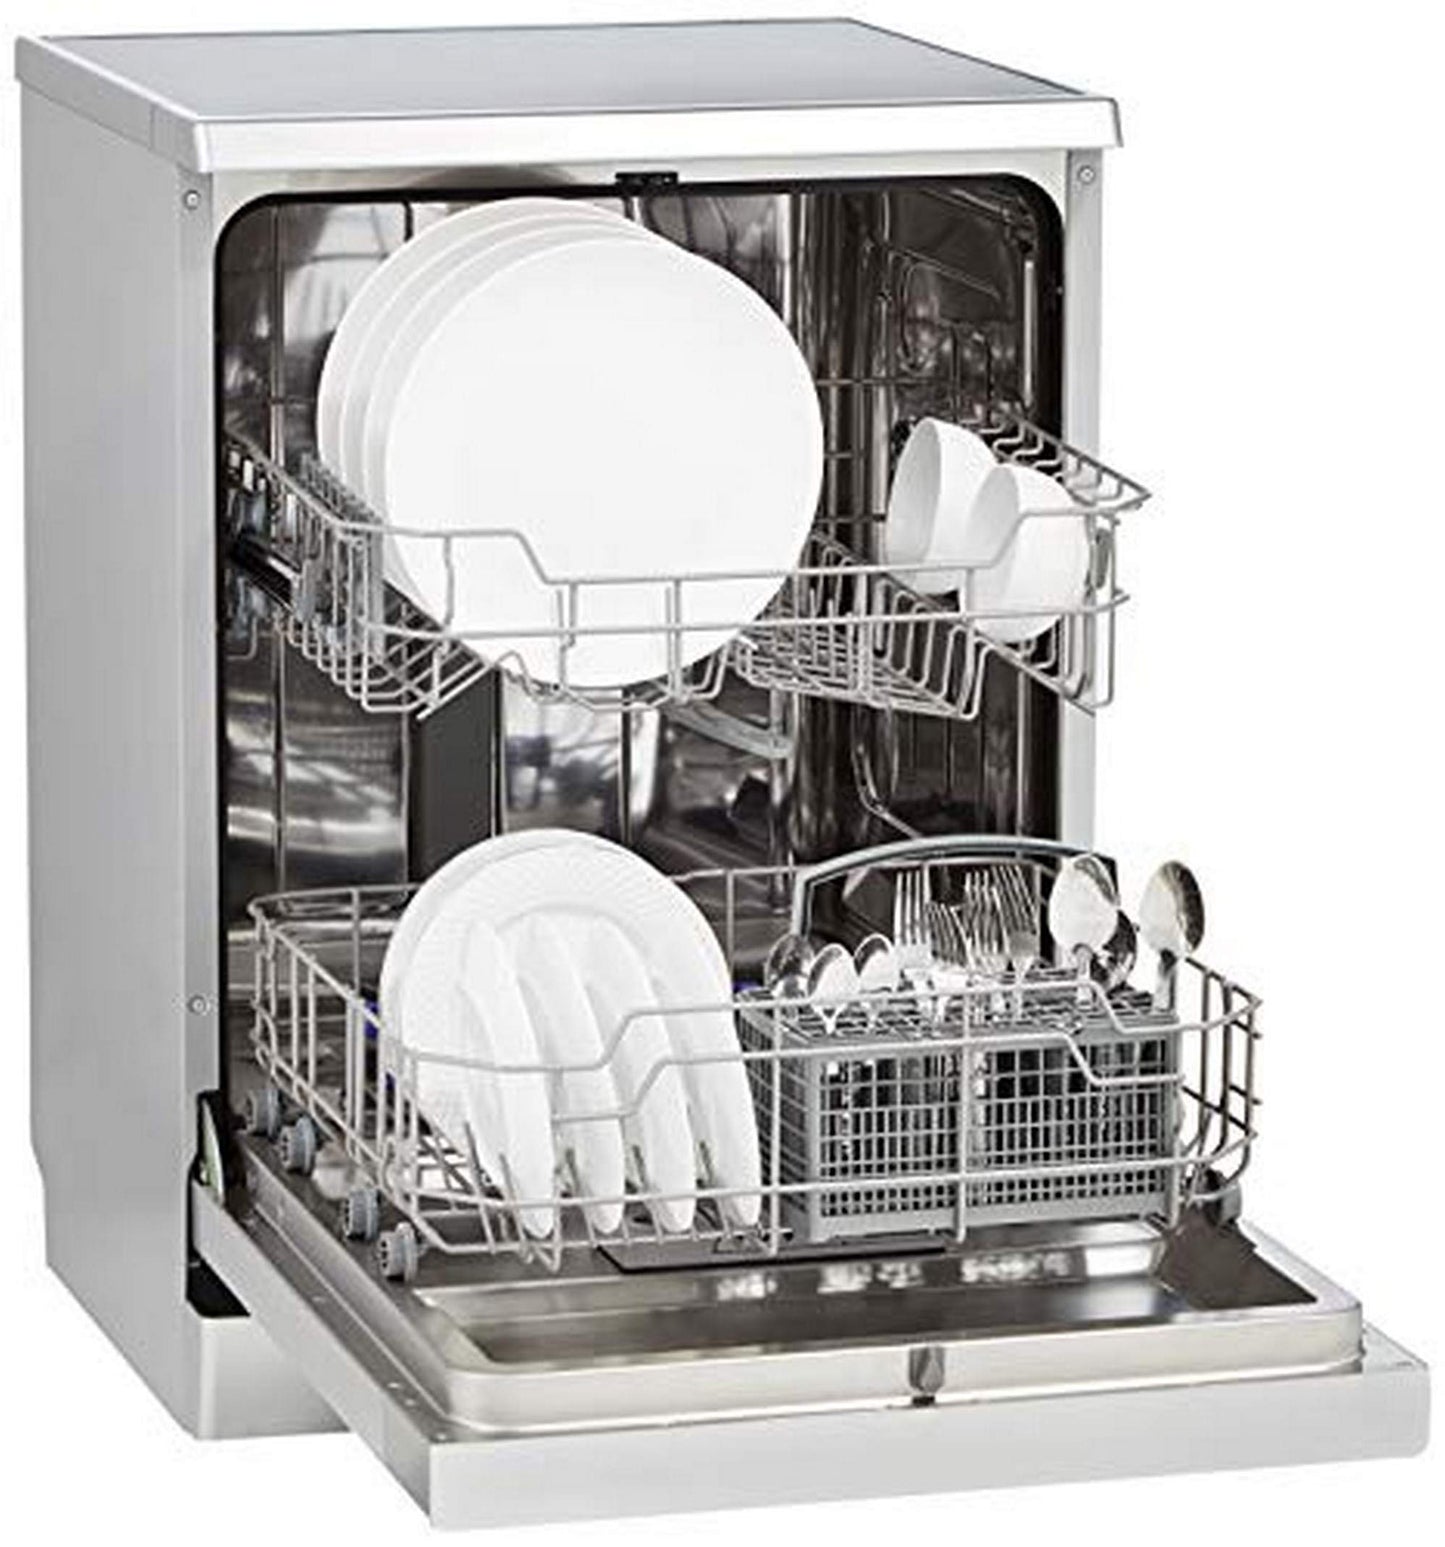 Royal Free Standing Dishwasher RBDW12-7S